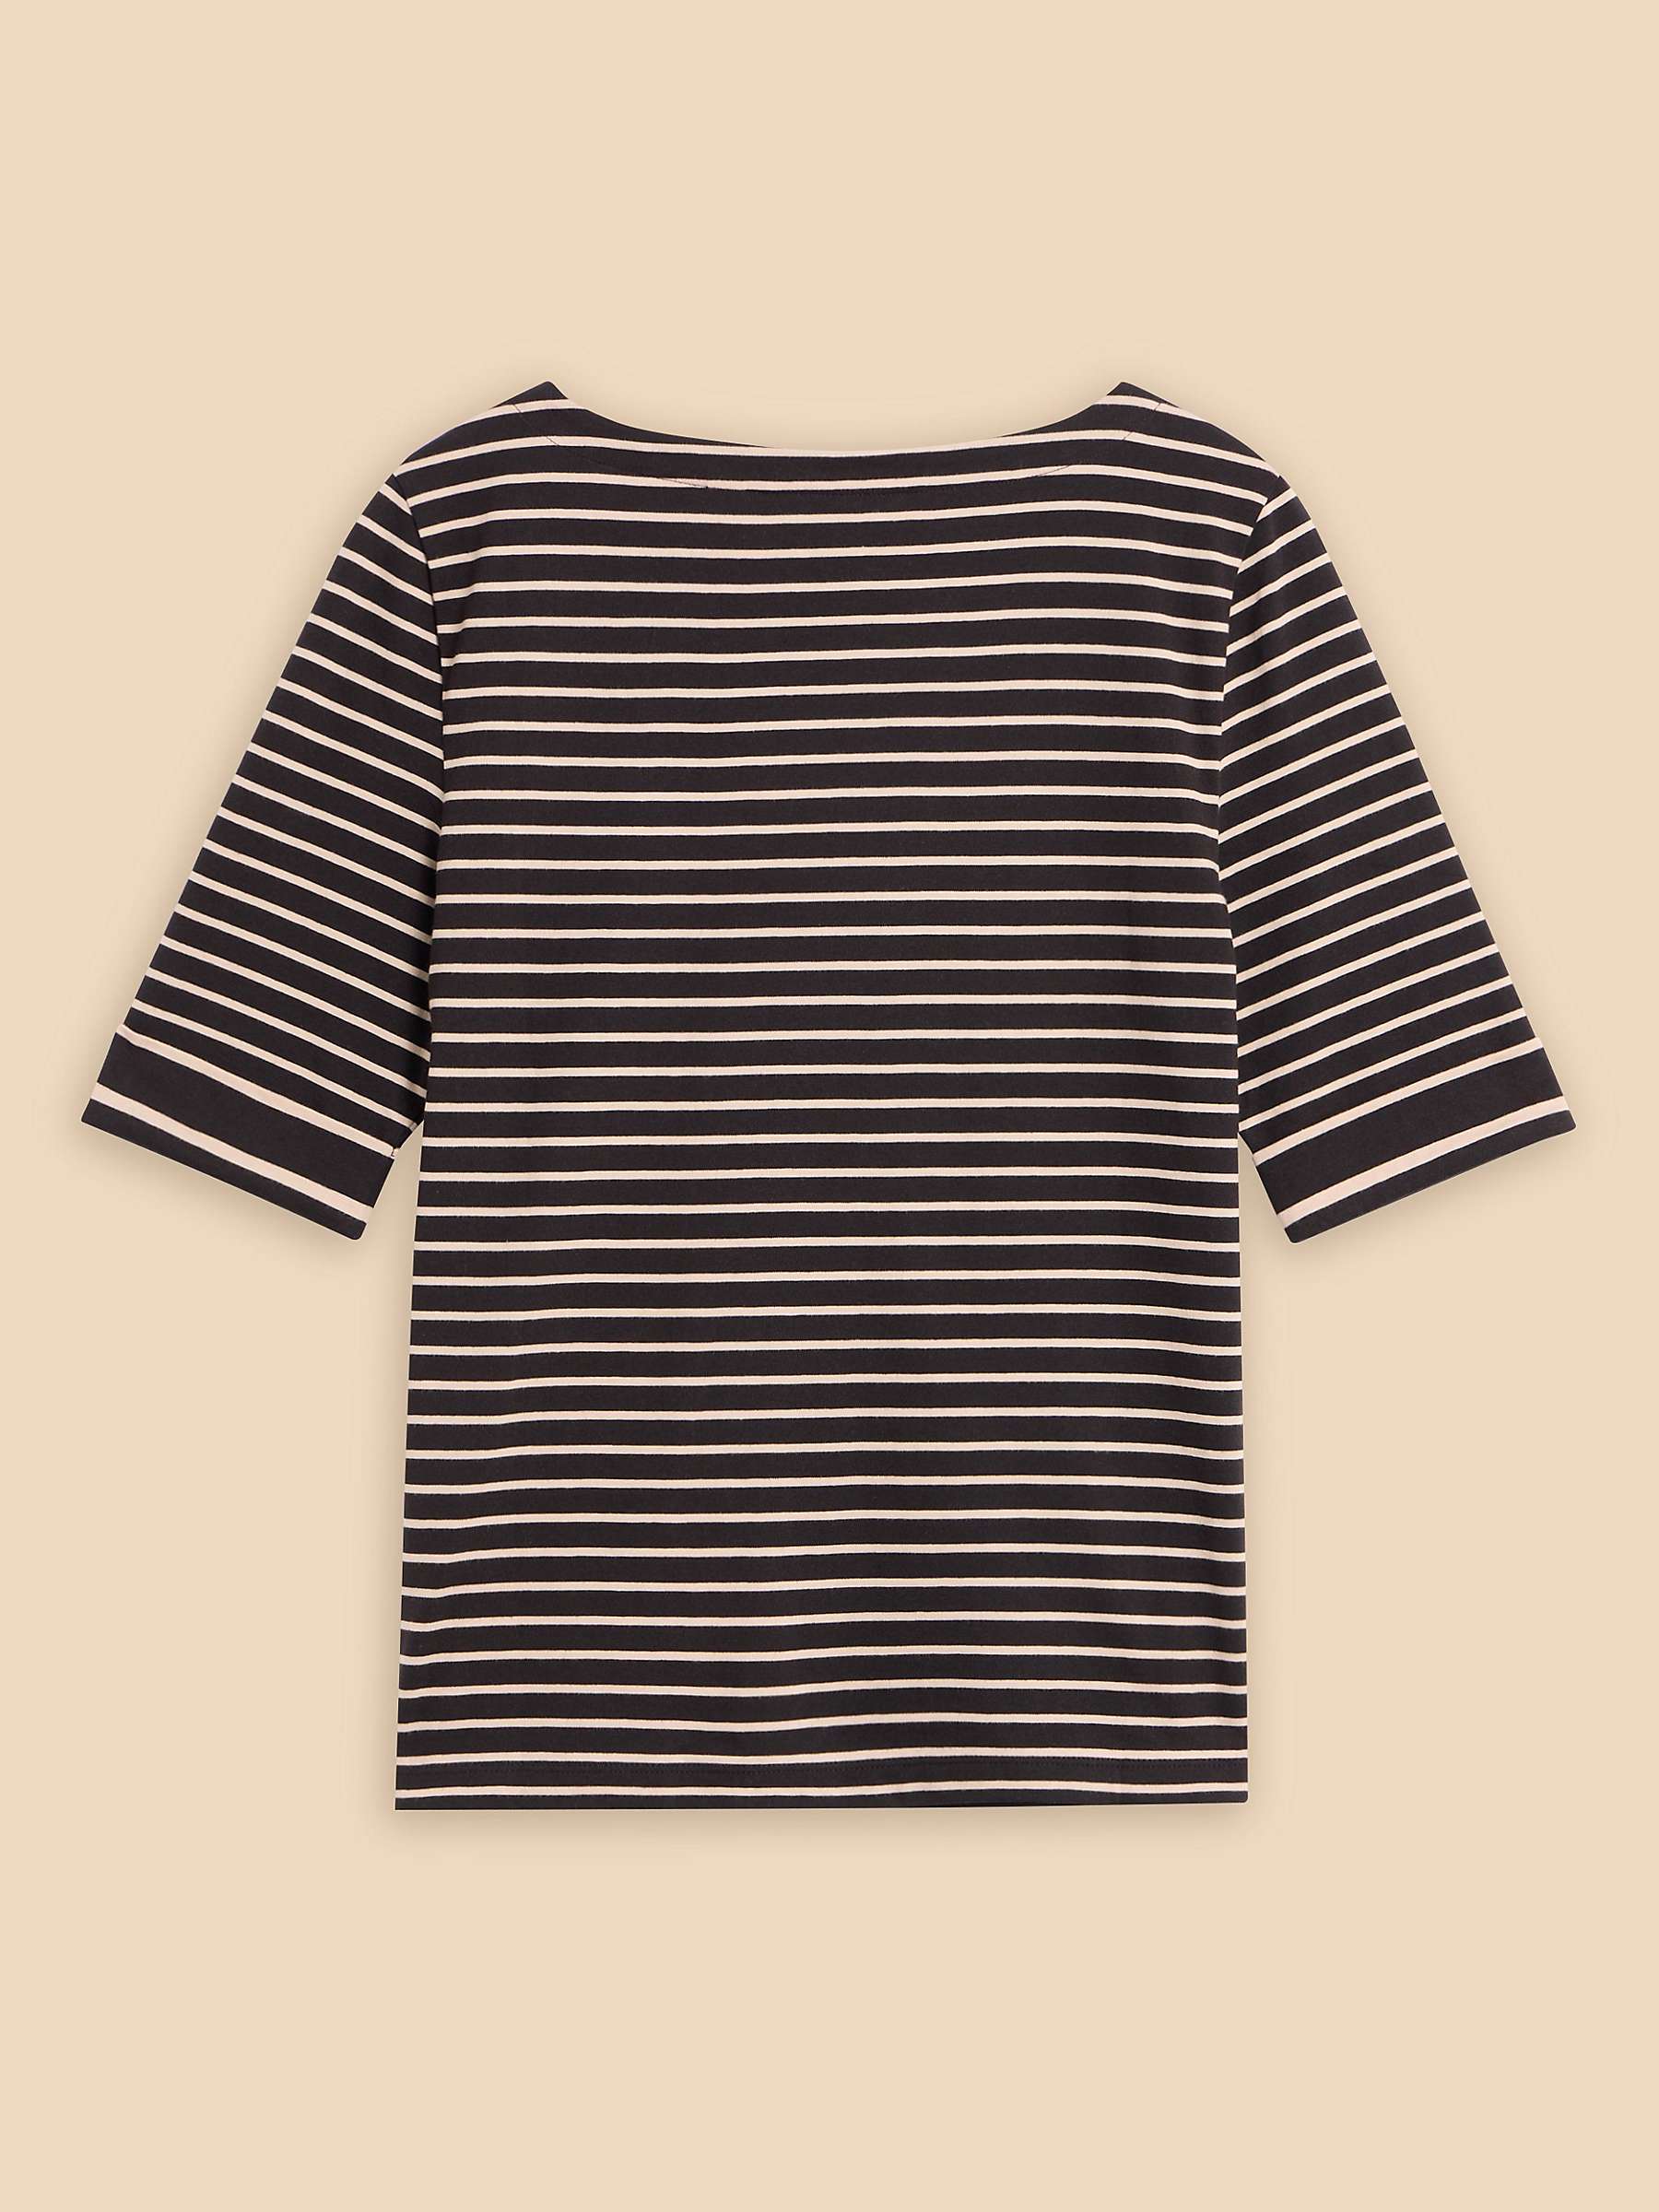 Buy White Stuff Sydney Boat Neck Stripe T-Shirt, Black/Multi Online at johnlewis.com